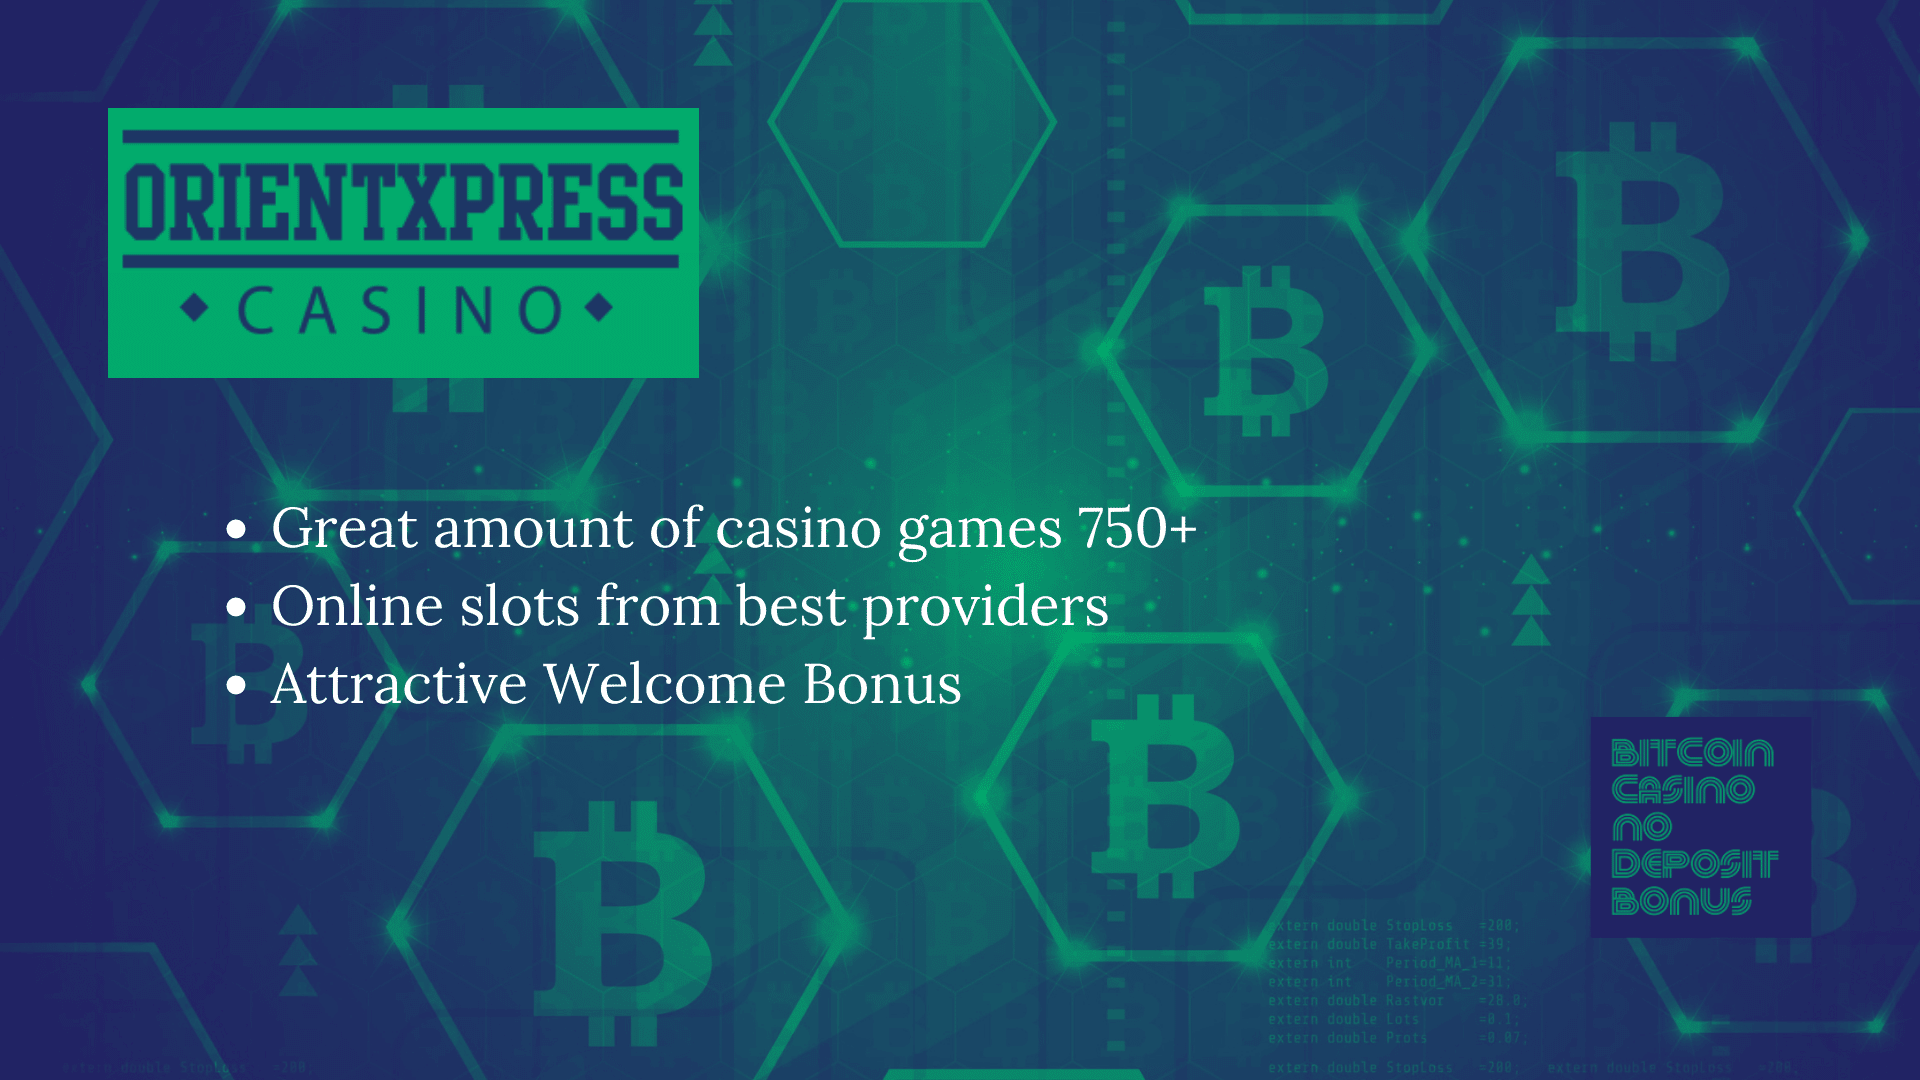 You are currently viewing Orientxpress Casino Bonus Codes – Orientxpresscasino.com Free Spins November 2022